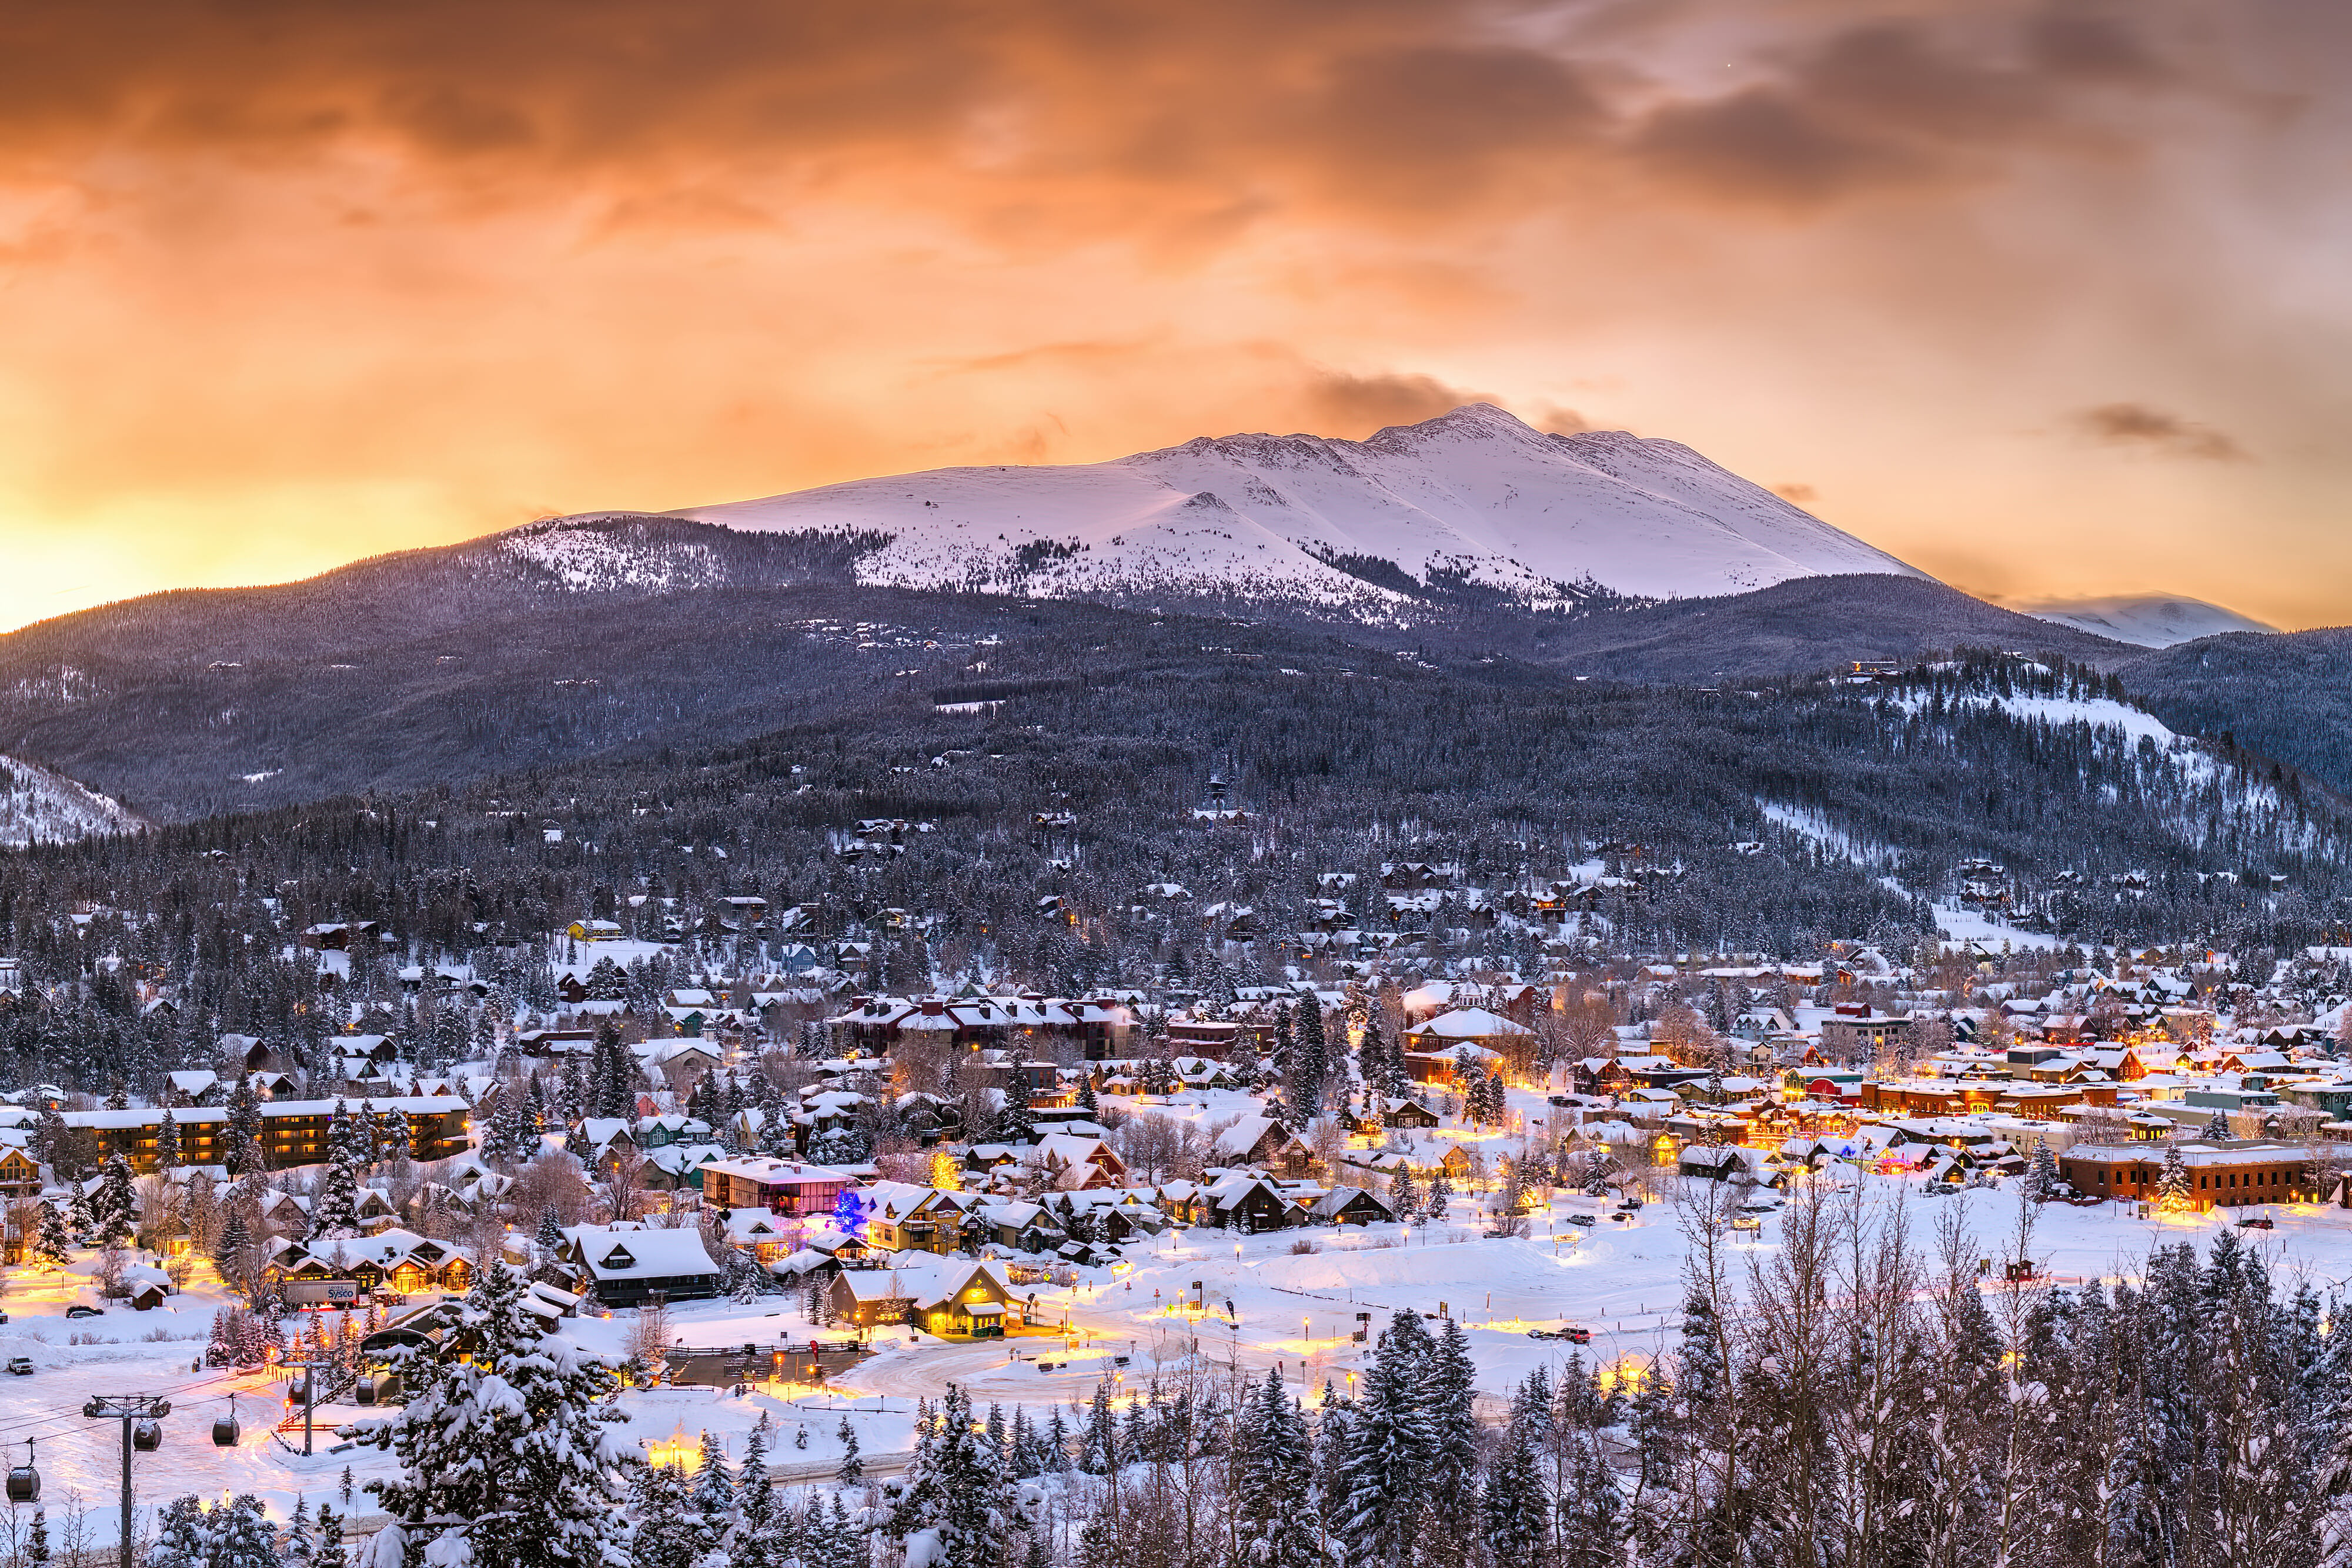 Breckenridge, Colorado, USA ski resort town skyline in winter